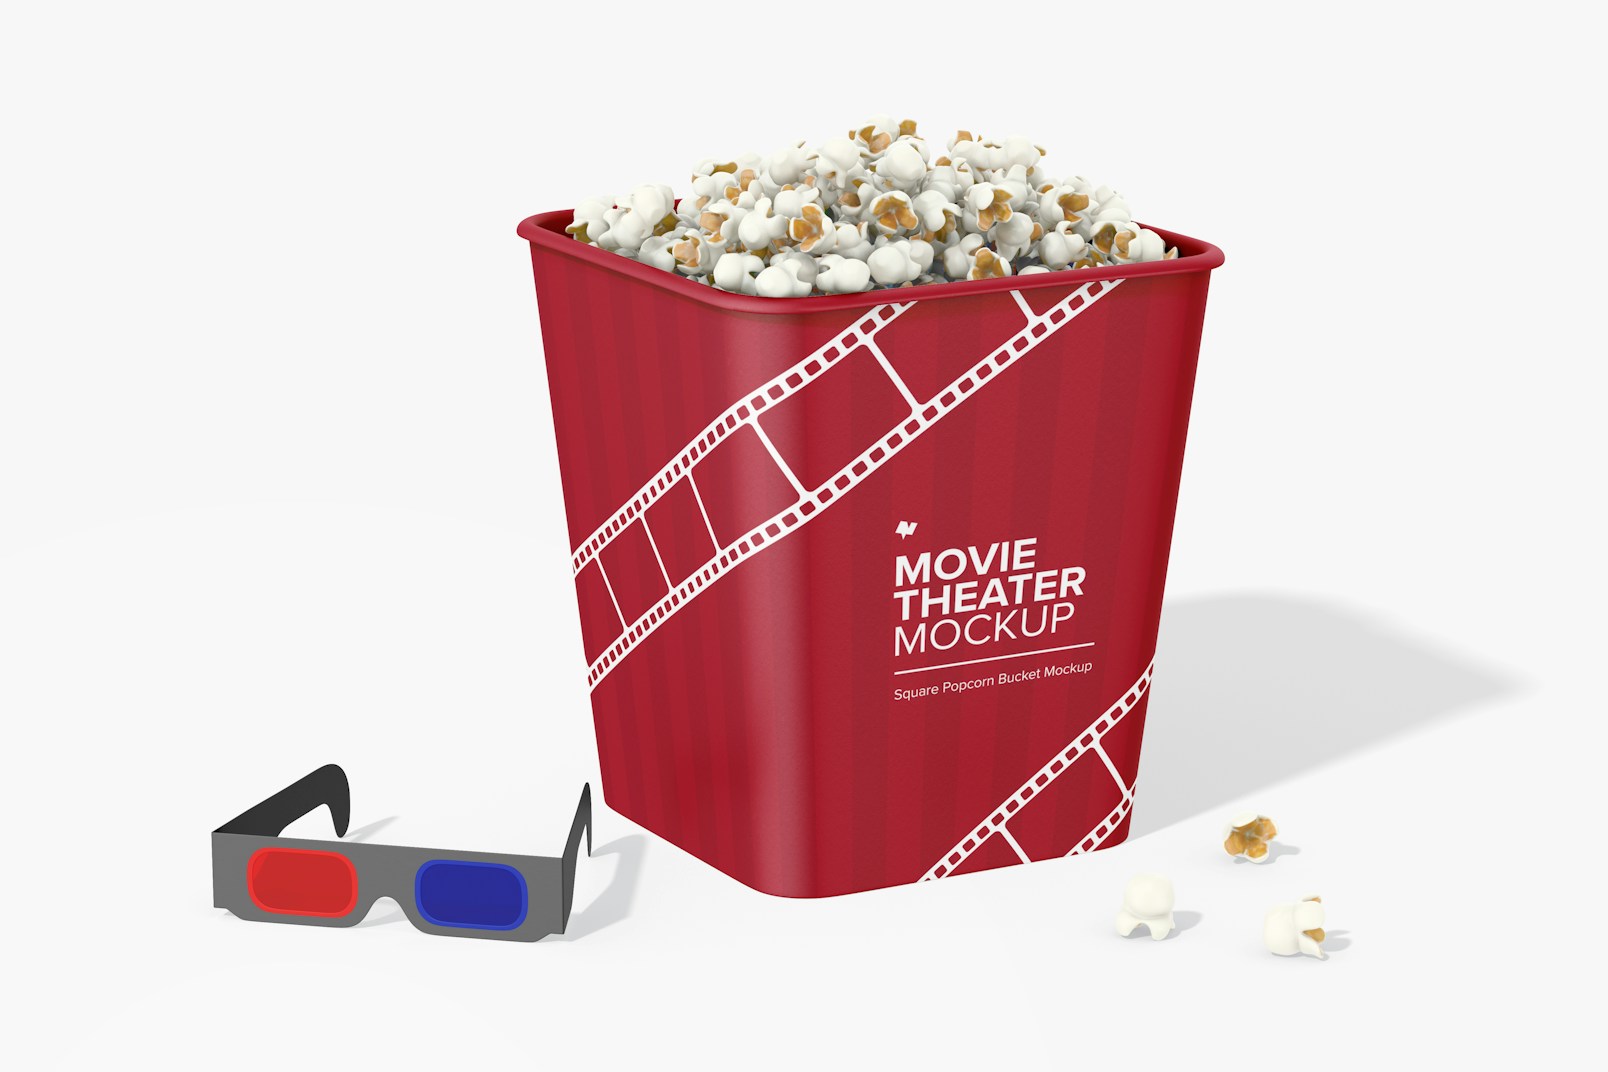 Square Popcorn Bucket Mockup, with Glasses